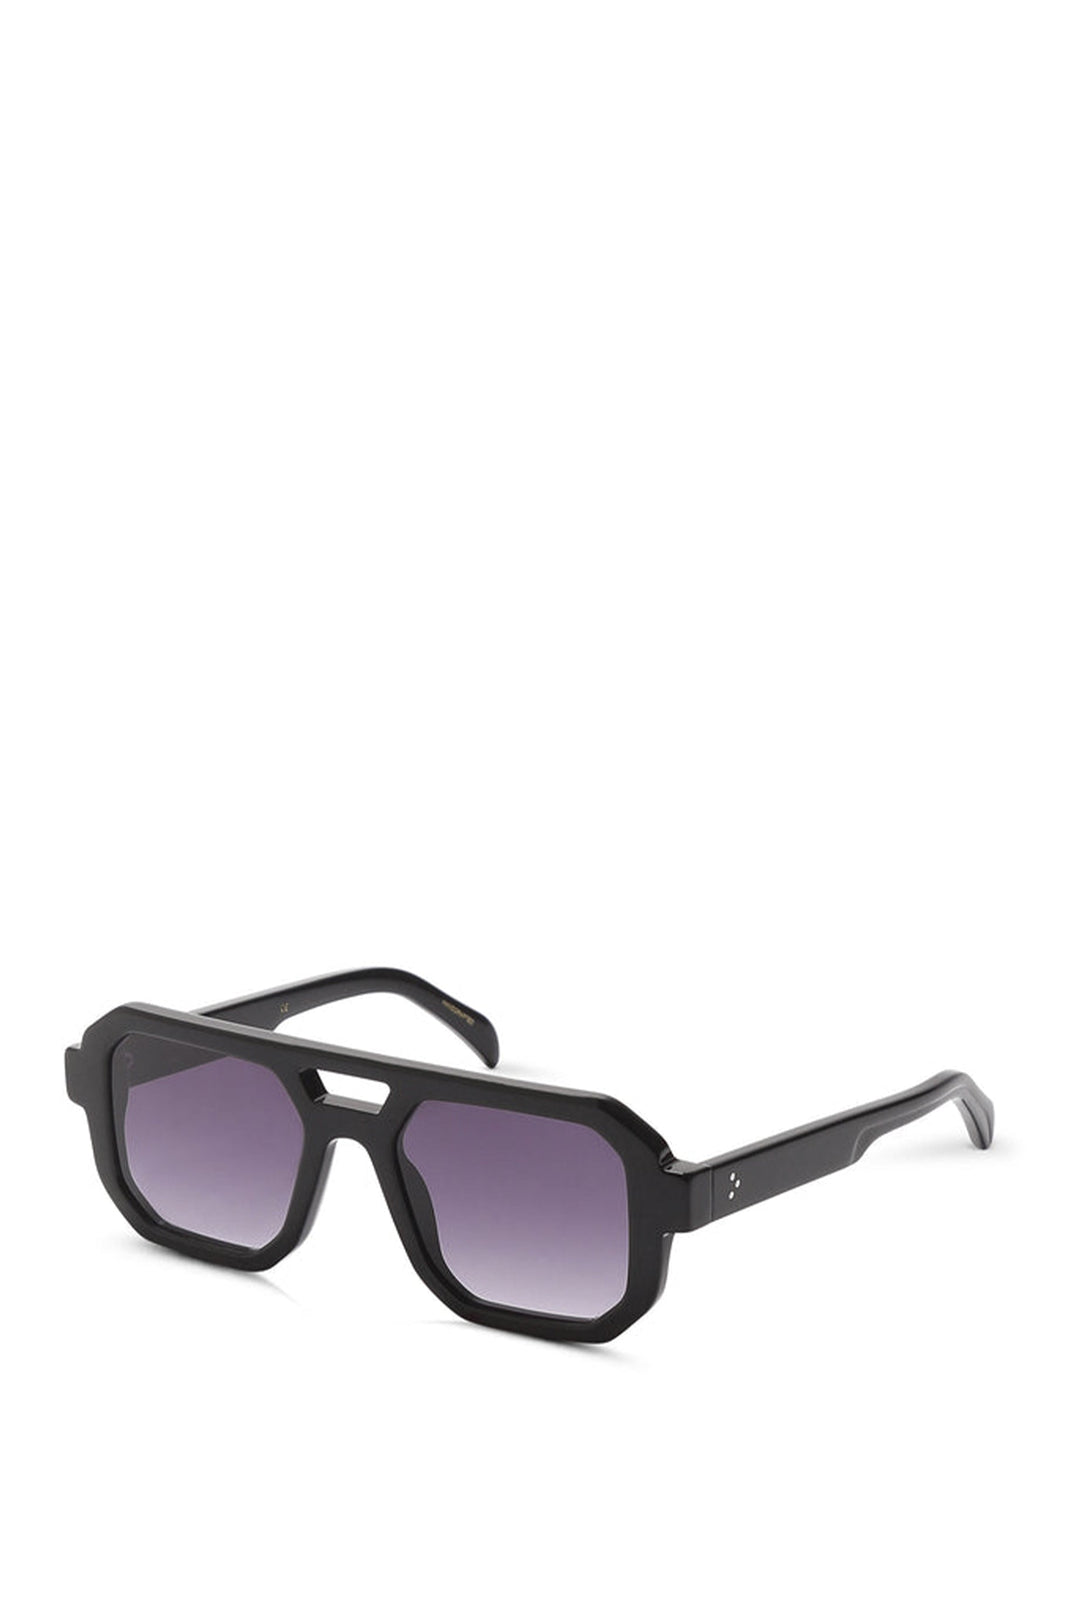 g.o.d 34 Sunglasses - Black